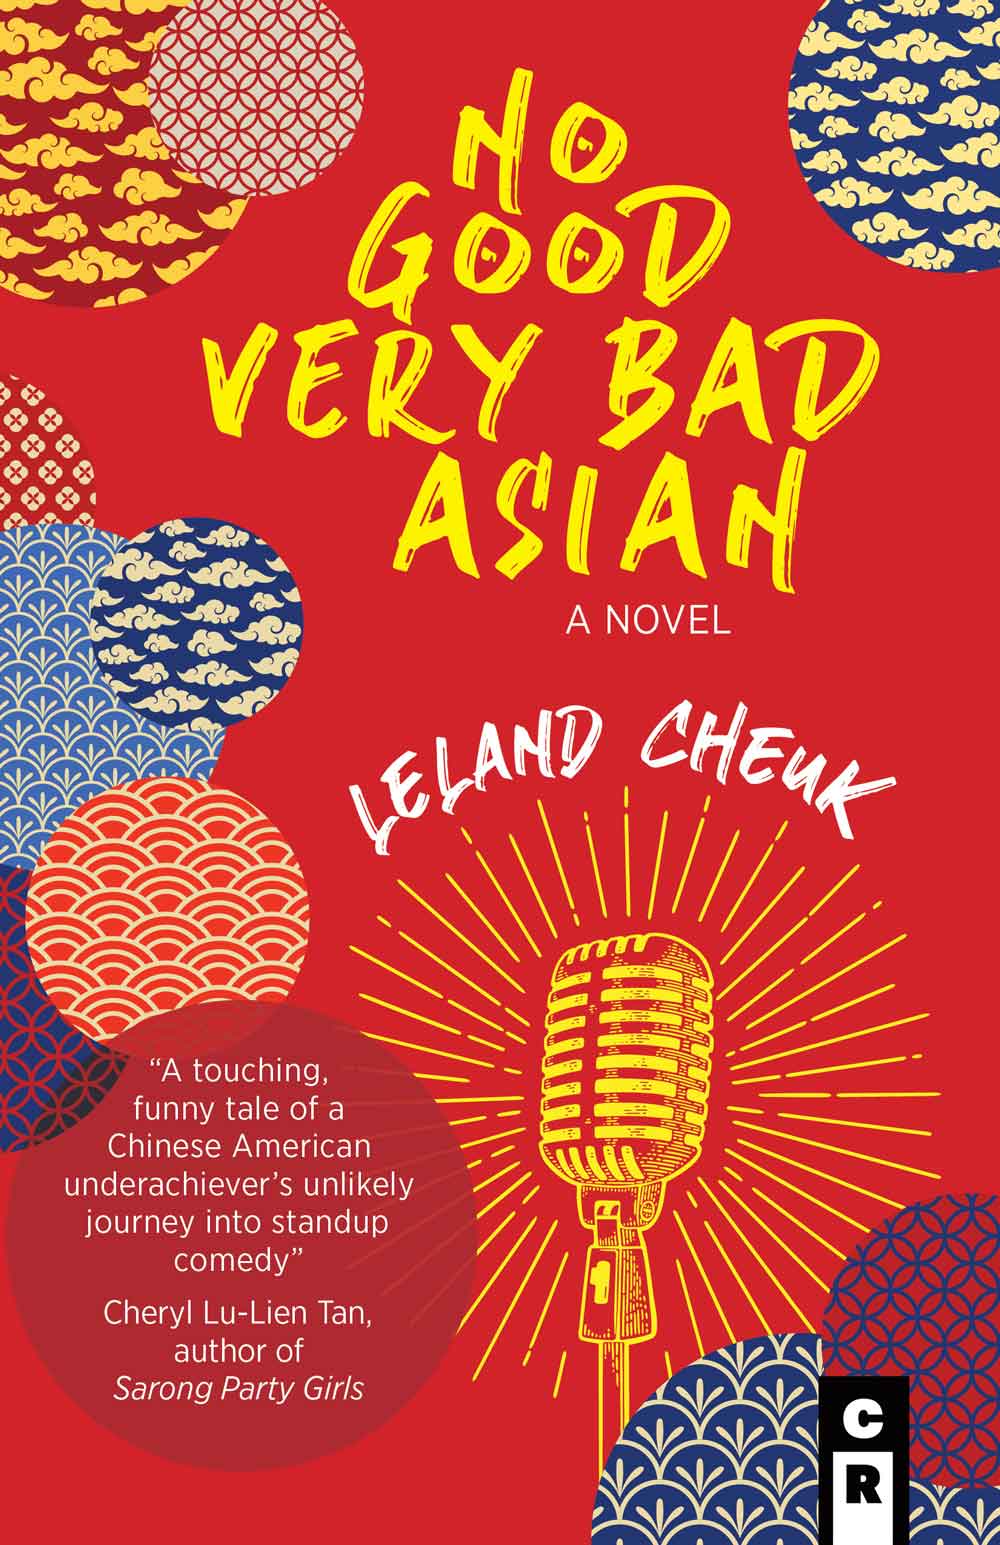 "No Good Very Bad Asian" a novel by Leland Cheuk